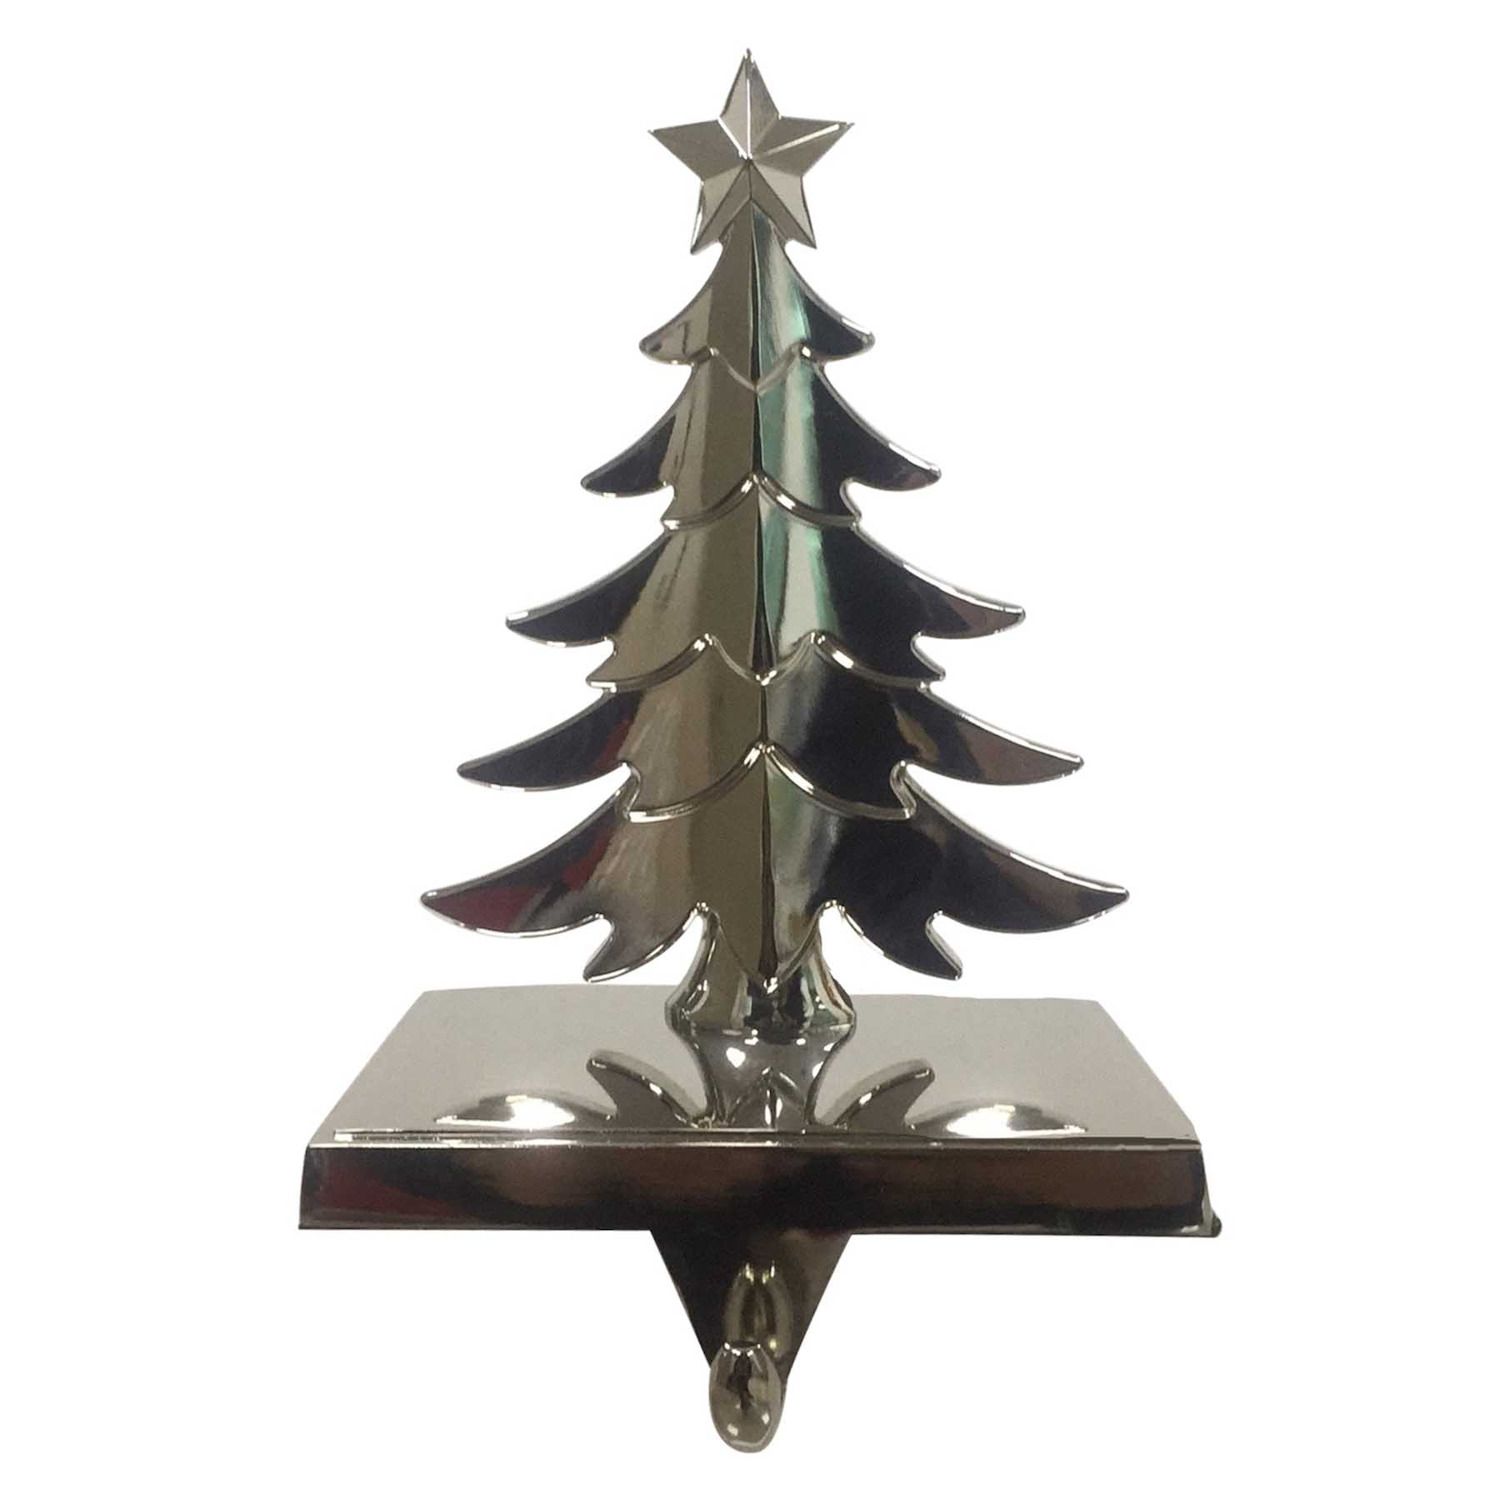 Sunnydaze Noelle Black Metal Christmas Ornament Tree - 60 inch